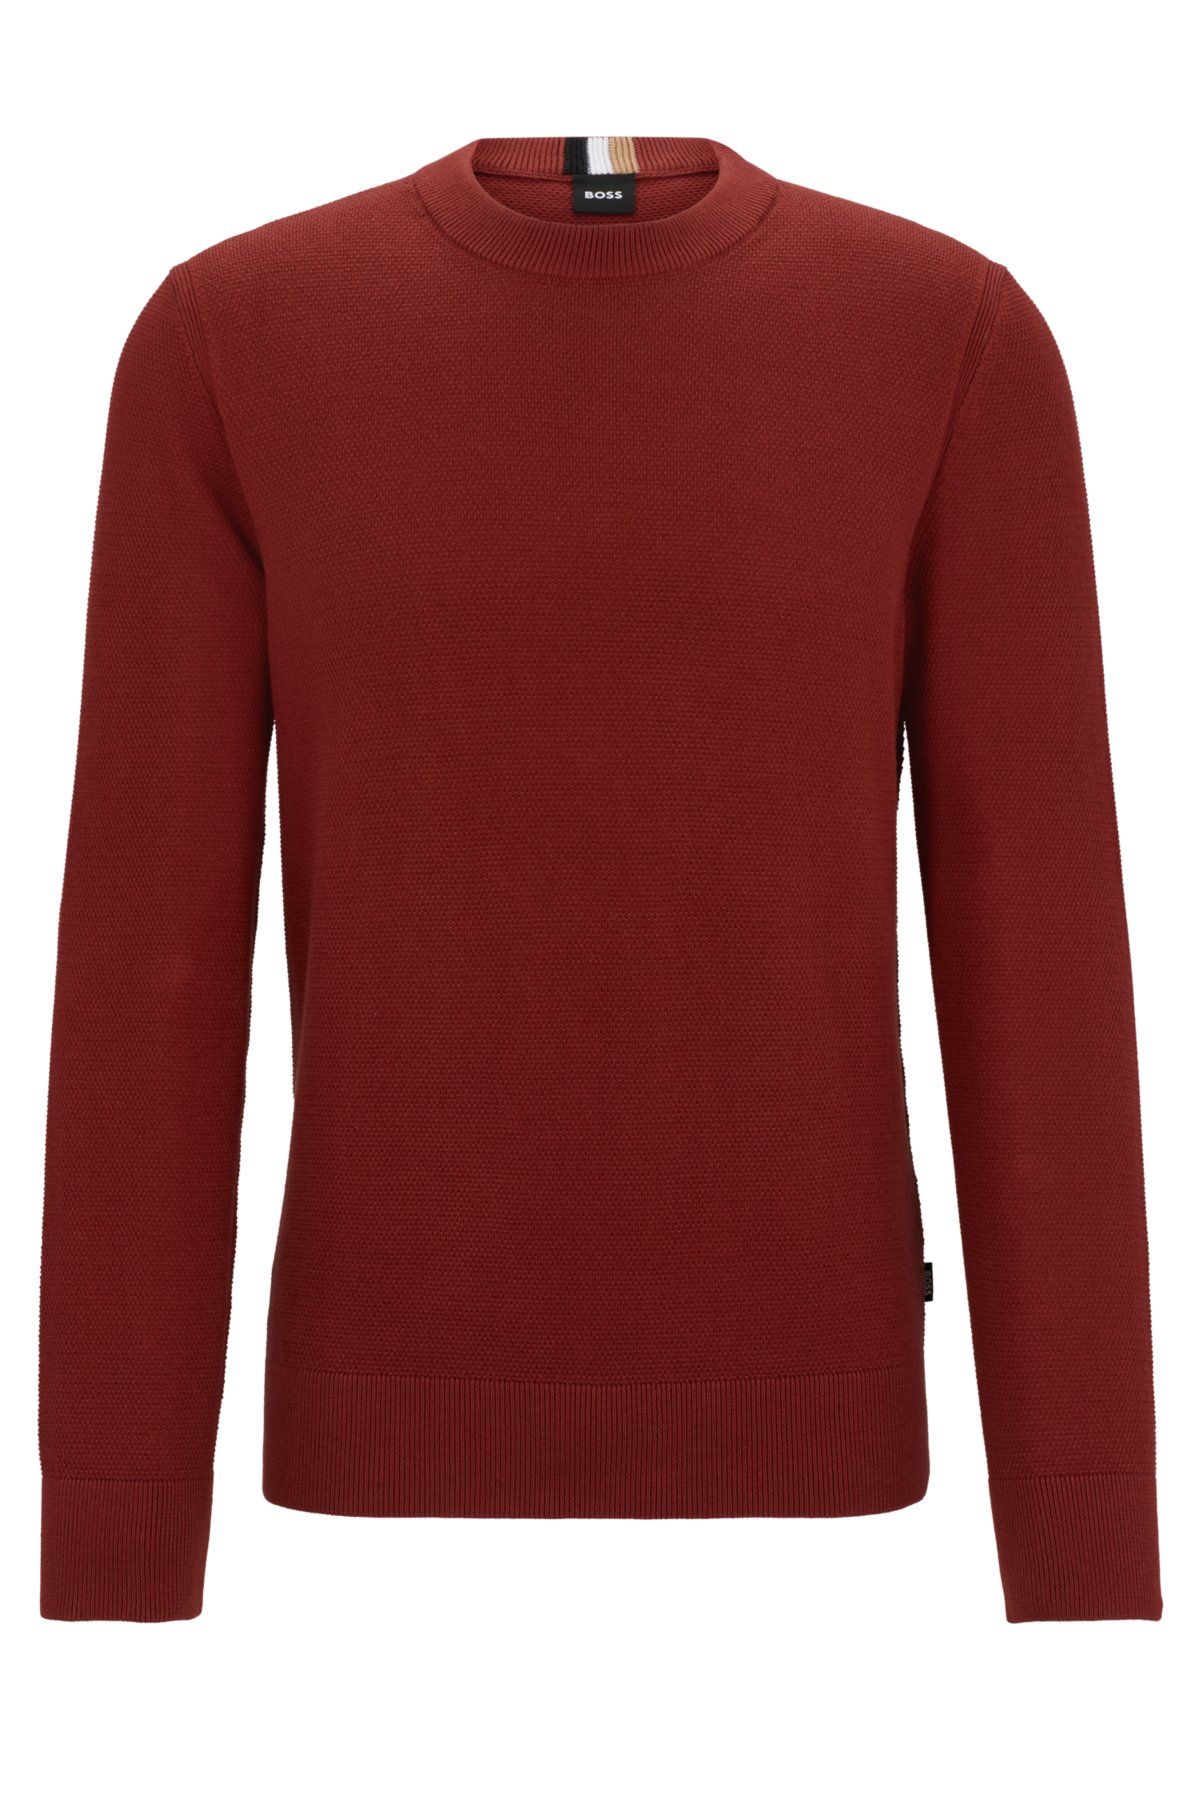 Micro-structured crew-neck sweater in cotton, Dark Red